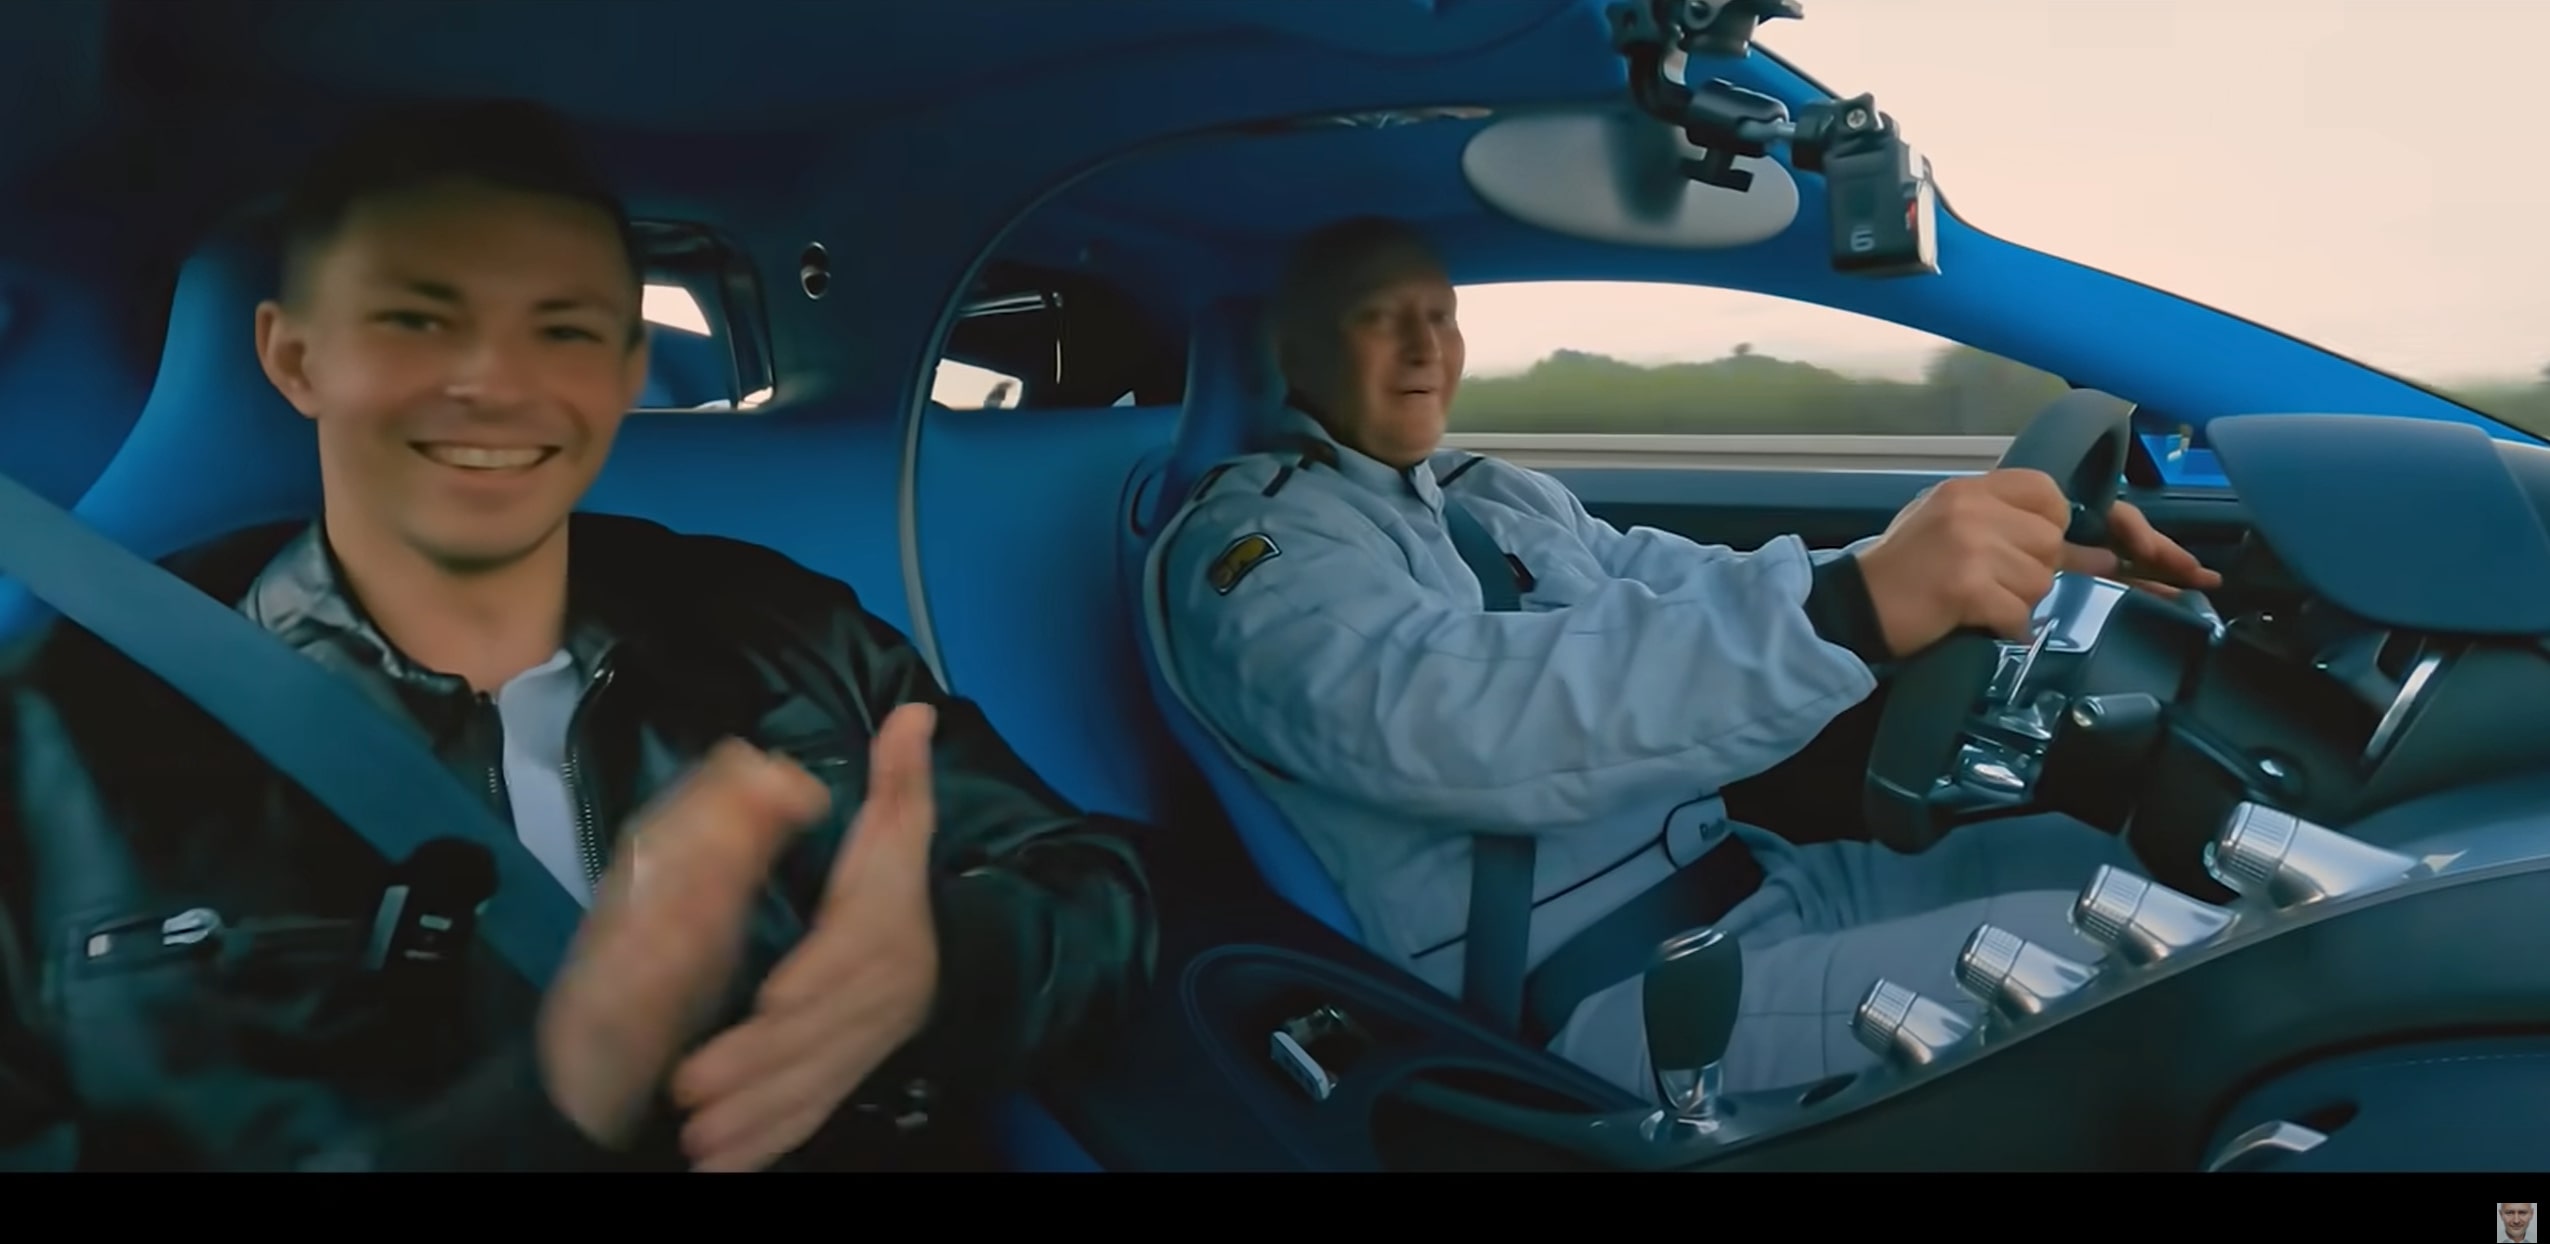 Radim Passer sits smiling in his Bugatti Chiron on the Autobahn